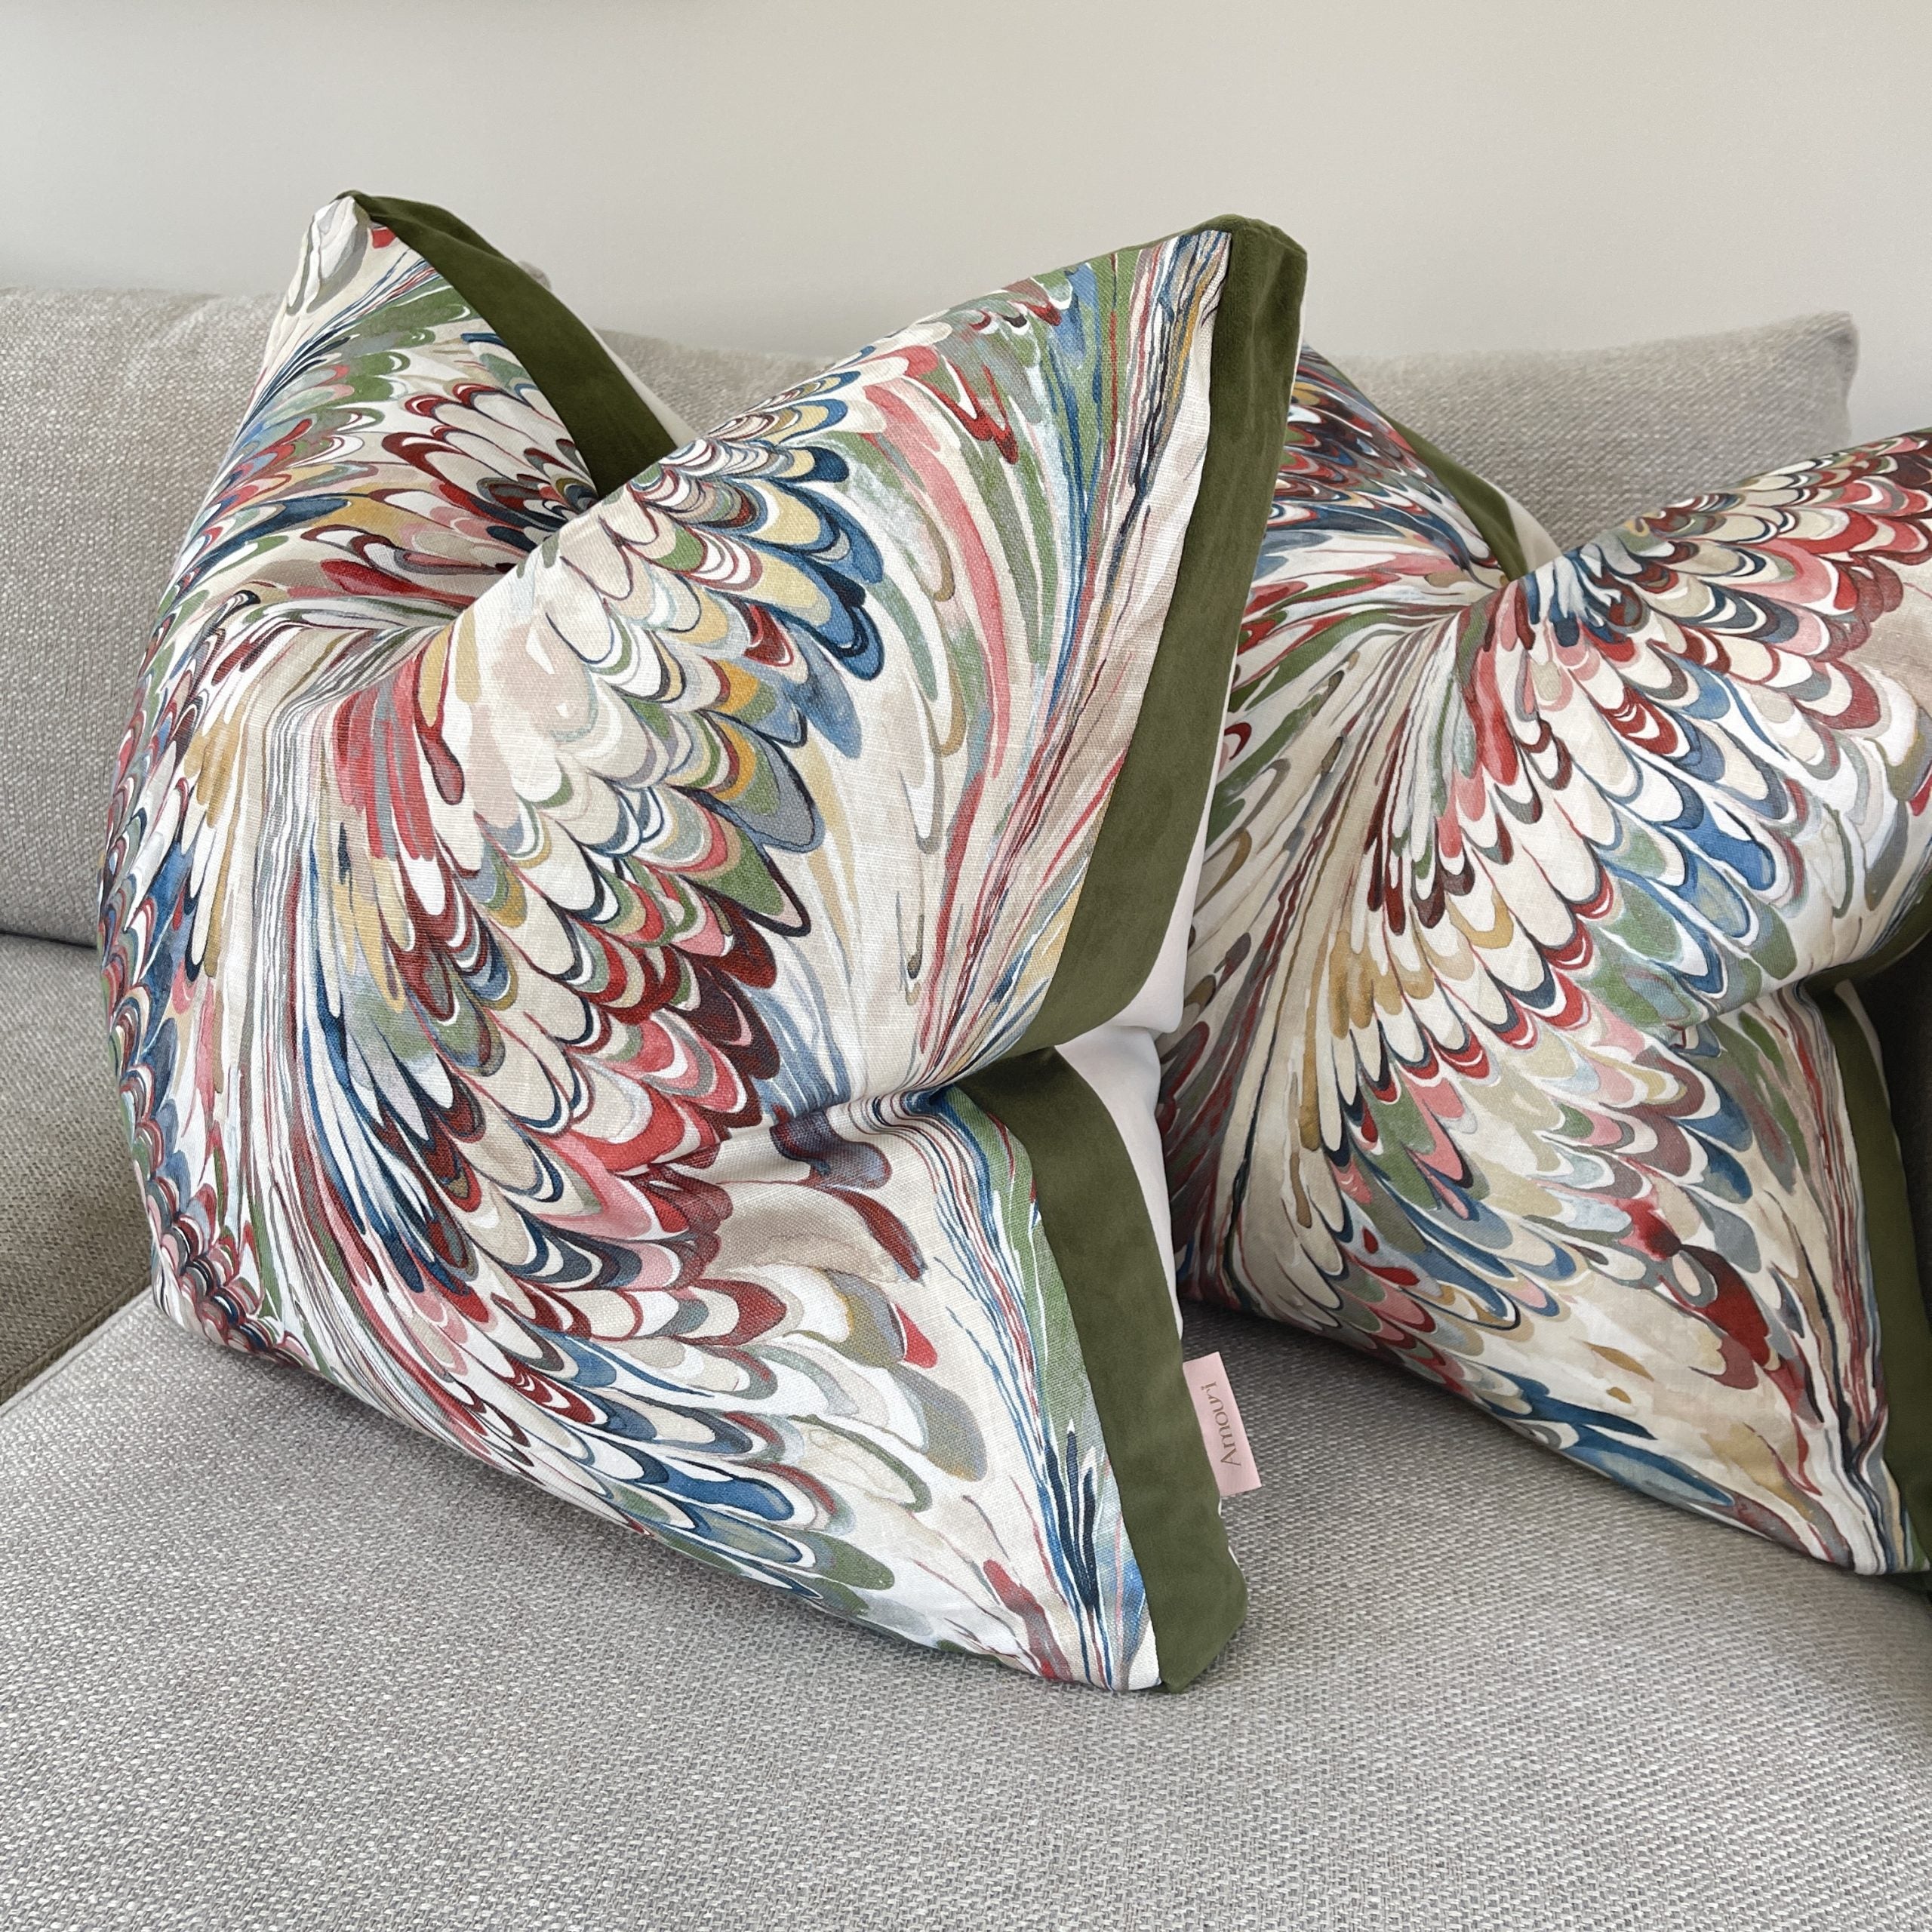 beautiful handmade cushions